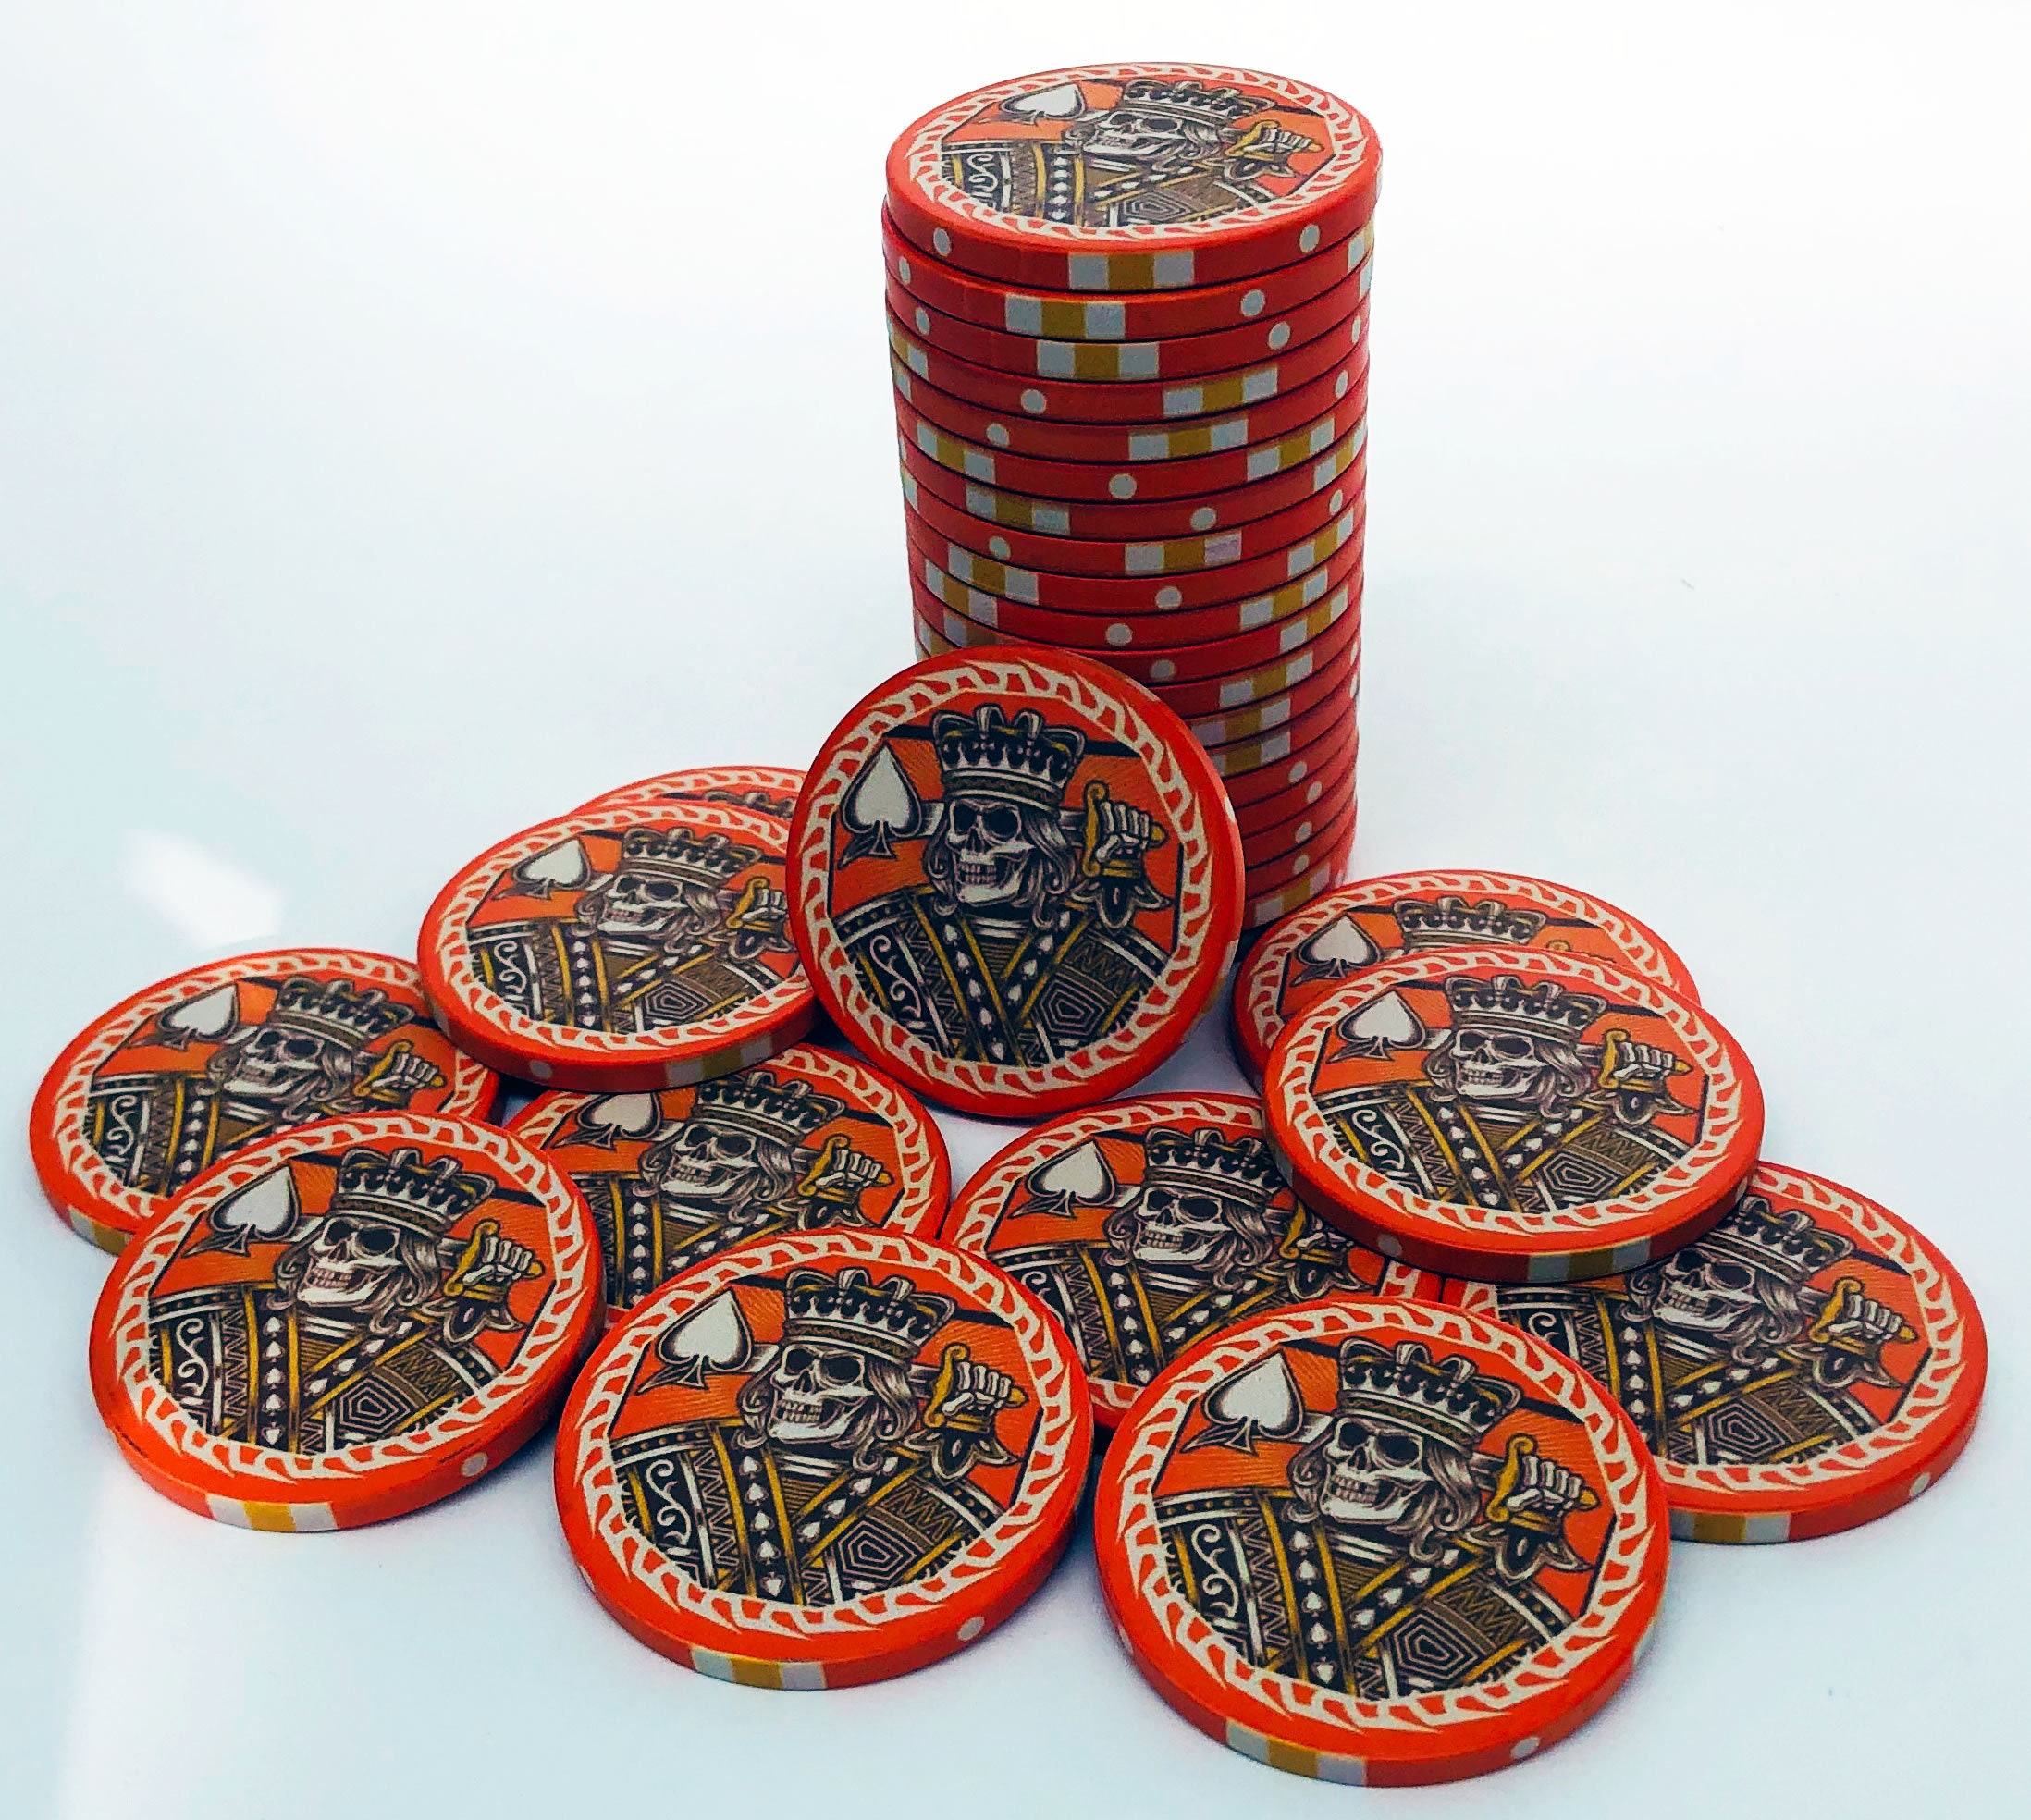 Real Brass Poker Set - 300 chips